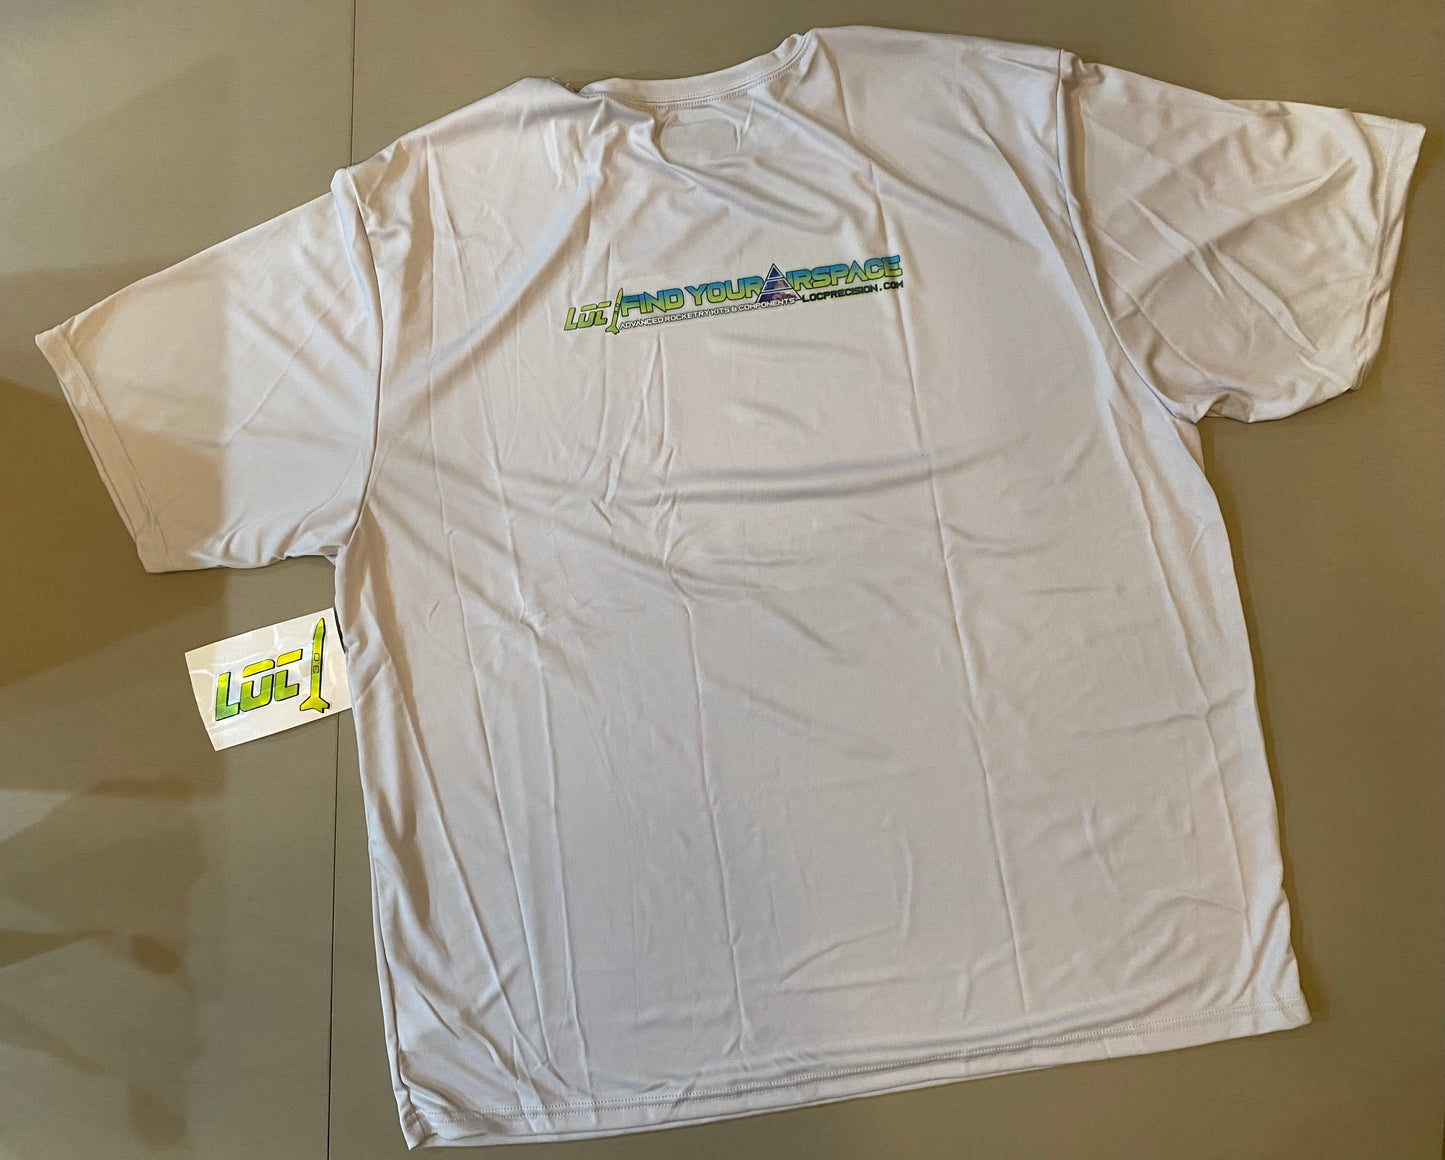 LOC / PML Fit Dry T-Shirt